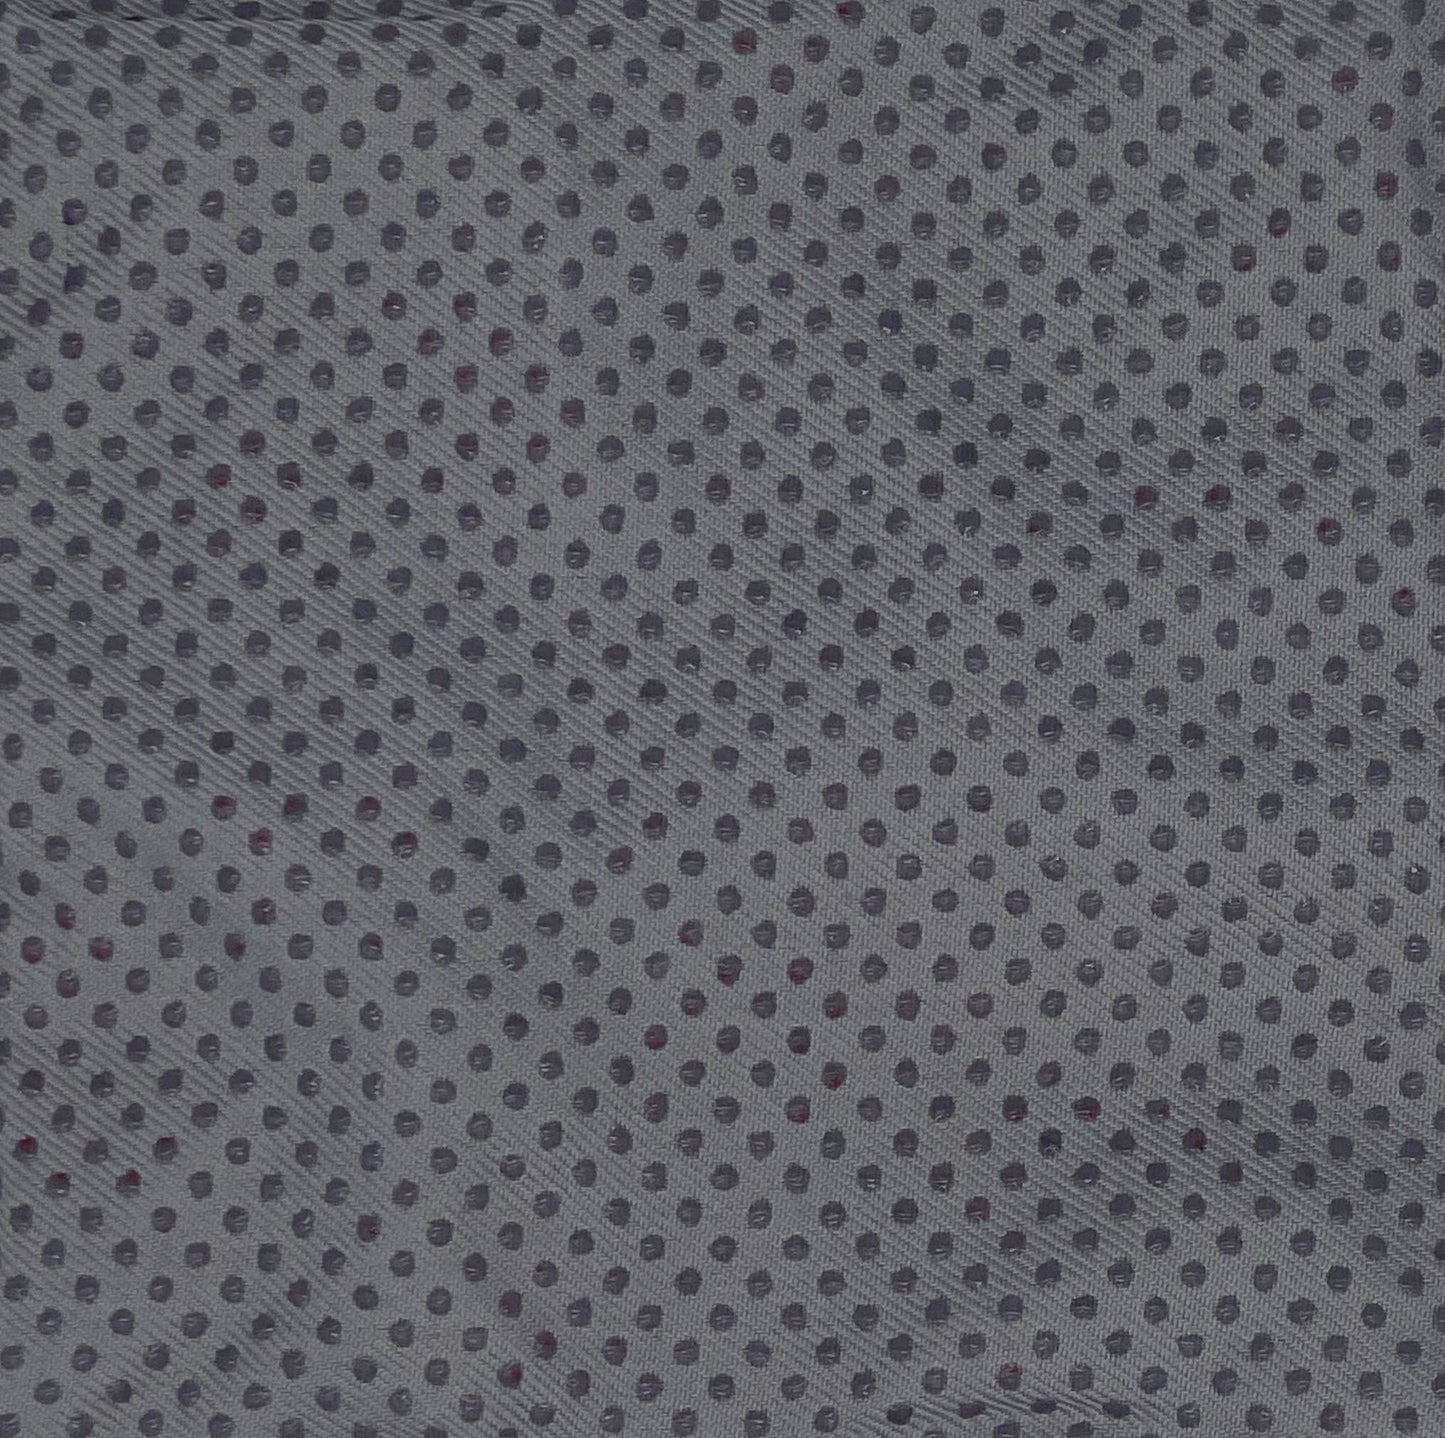 Textured Baby Paper-Black/Gray